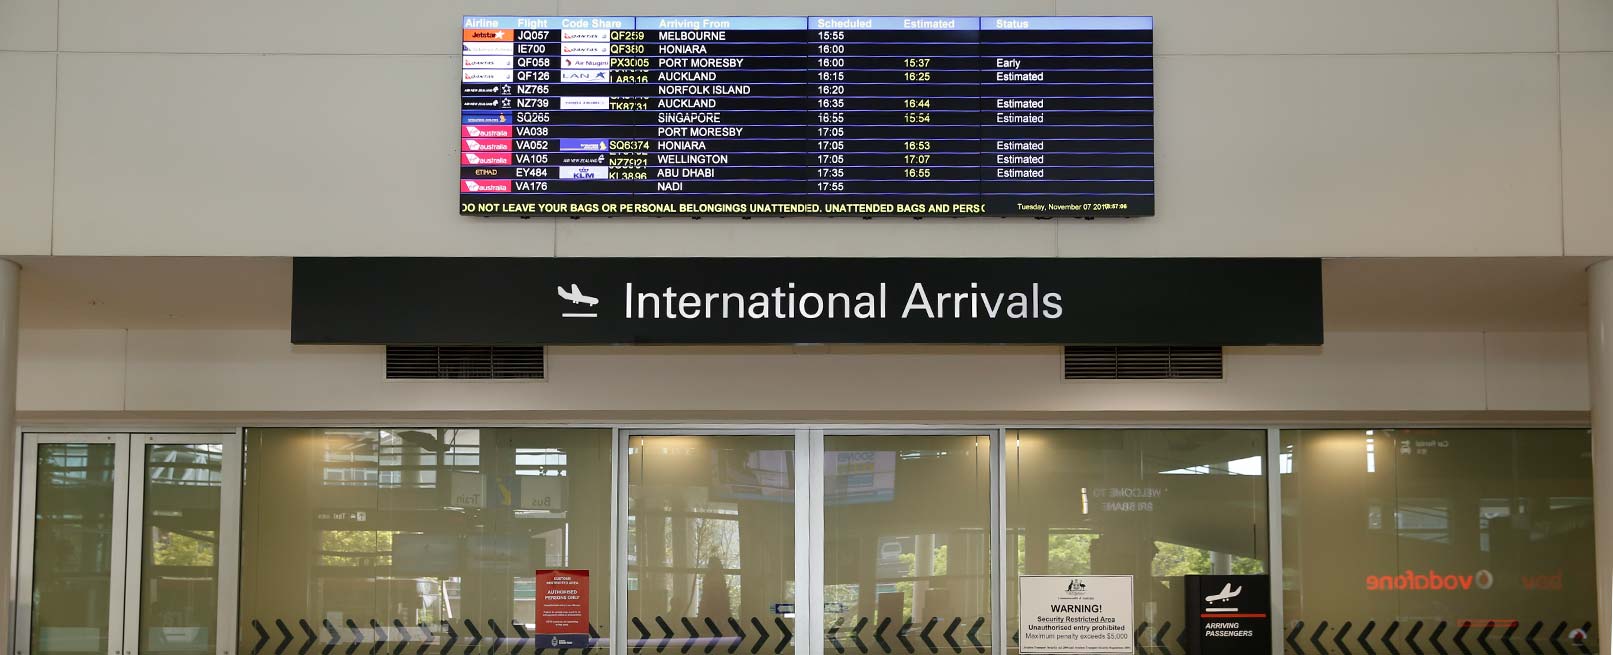 International Arrivals Guide